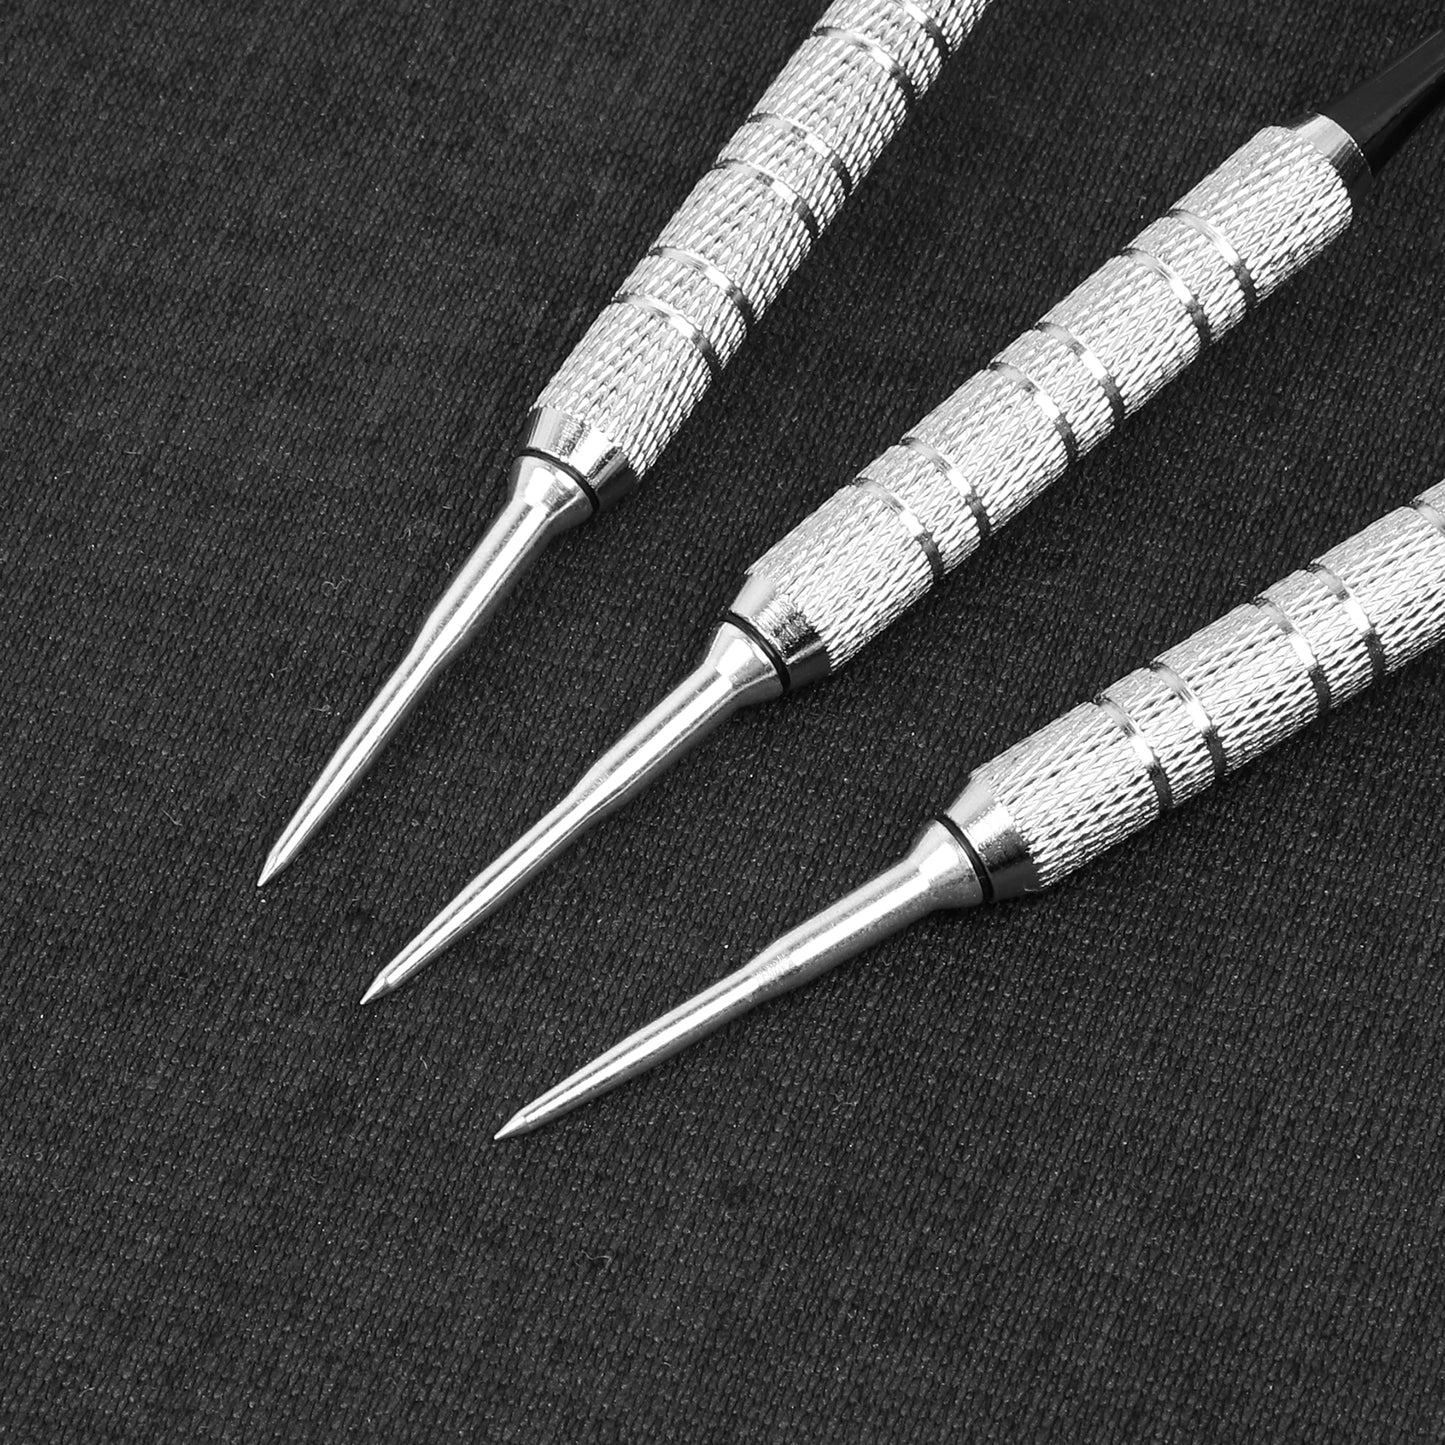 CL02A Stainless steel dart tips 12pcsfor soft tip dart barrels dart tool Conversion accessories 12Packs